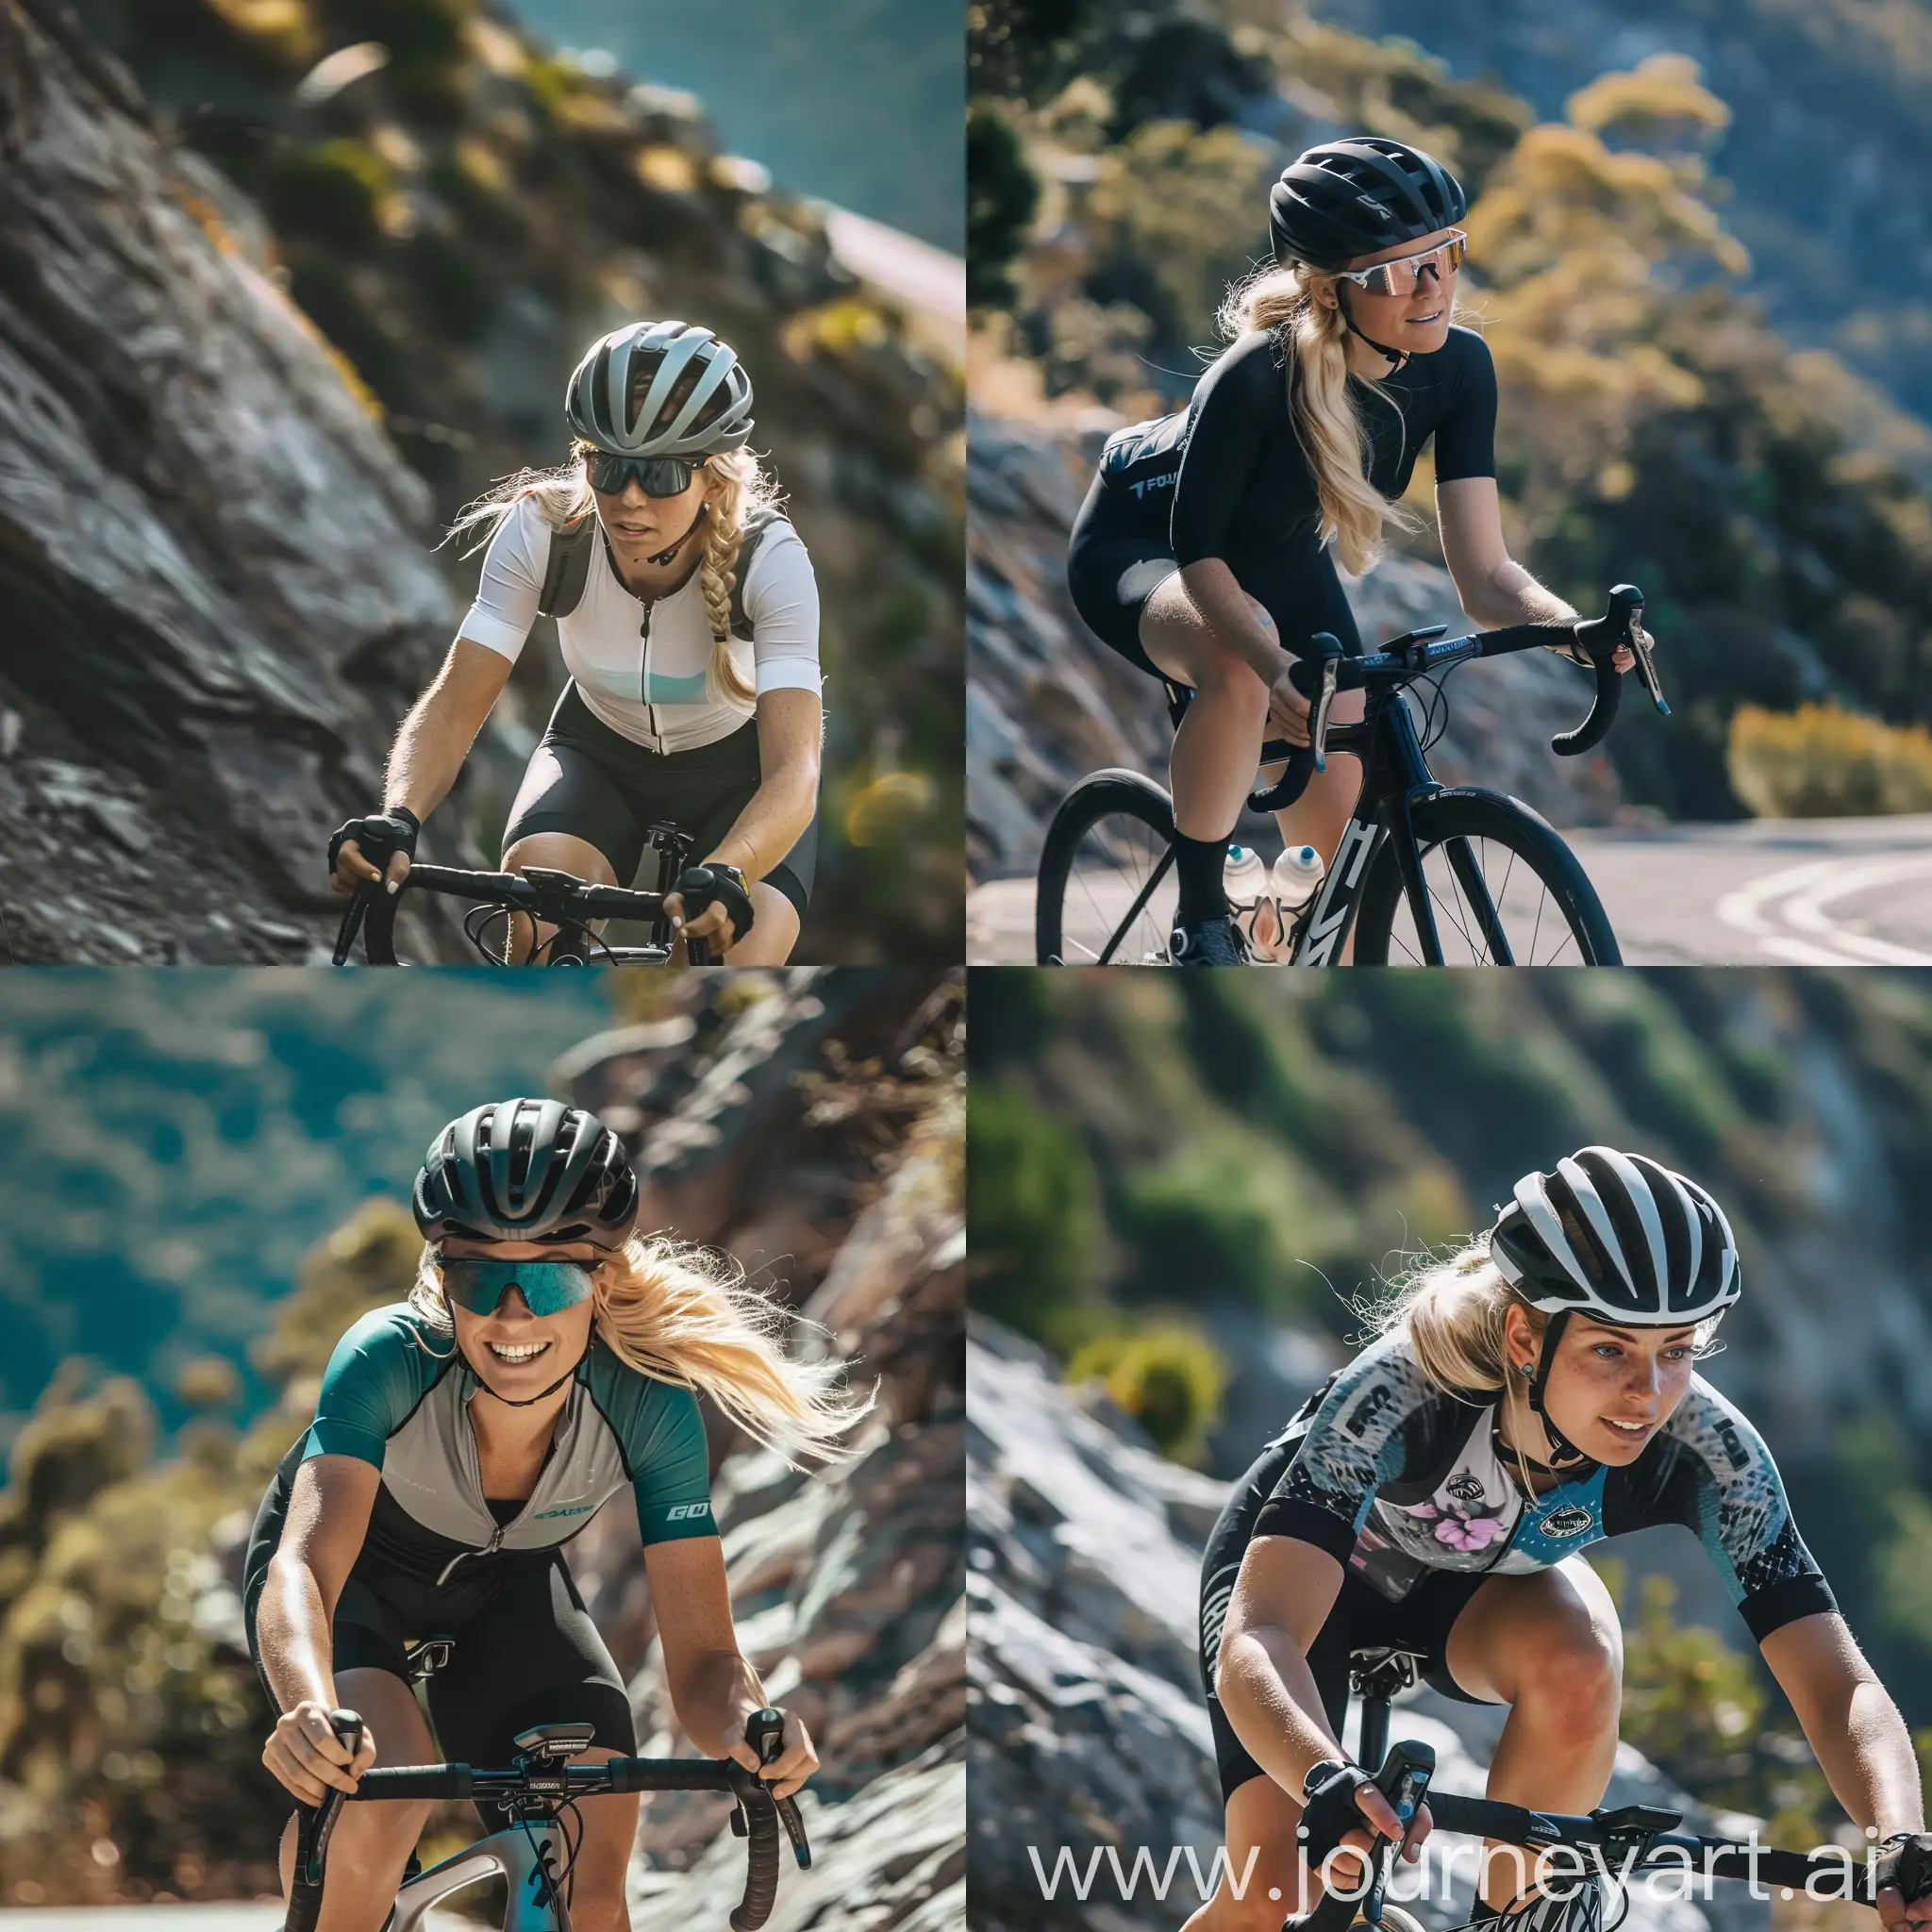 Adventurous-Australian-Blonde-Cycling-Uphill-on-Mountain-Road